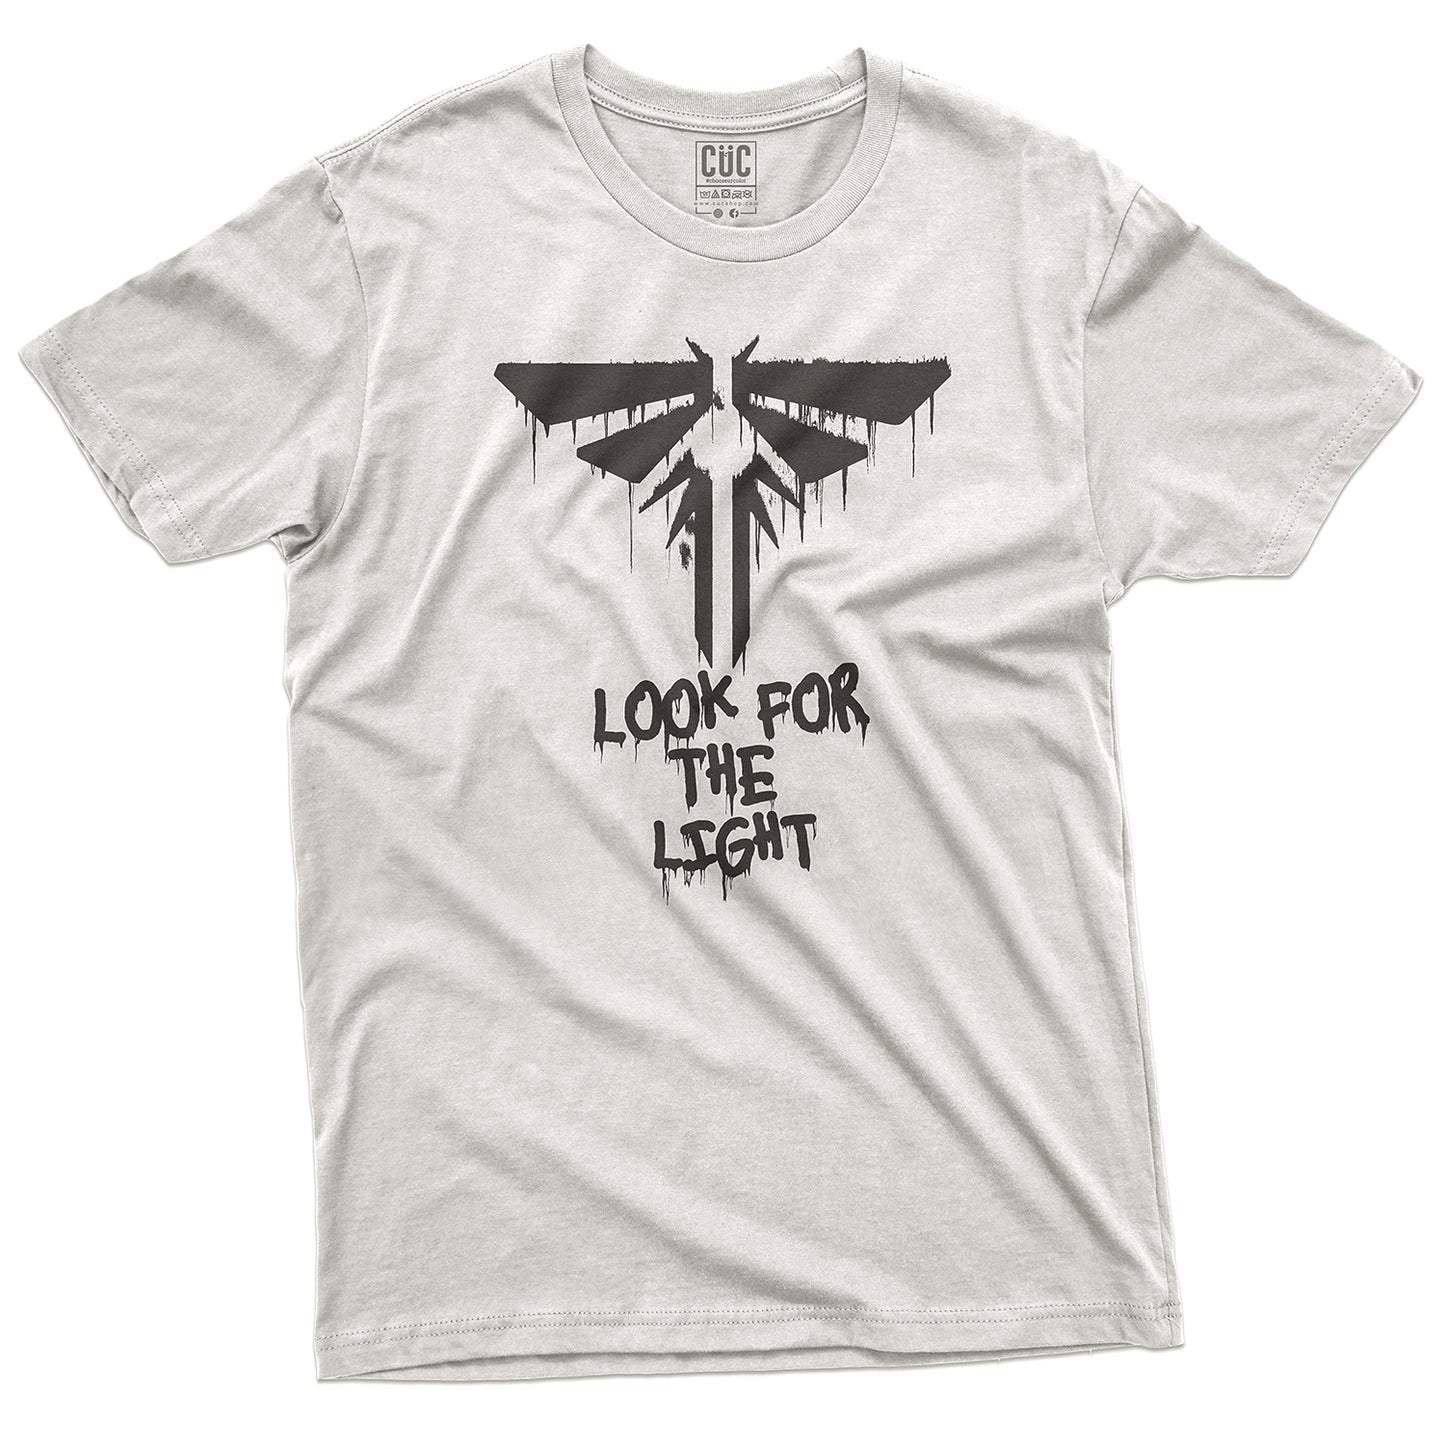 CUC T-Shirt LOOK 4 THE LIGHT - The Last of Us - Games - White  #chooseurcolor - CUC chooseurcolor